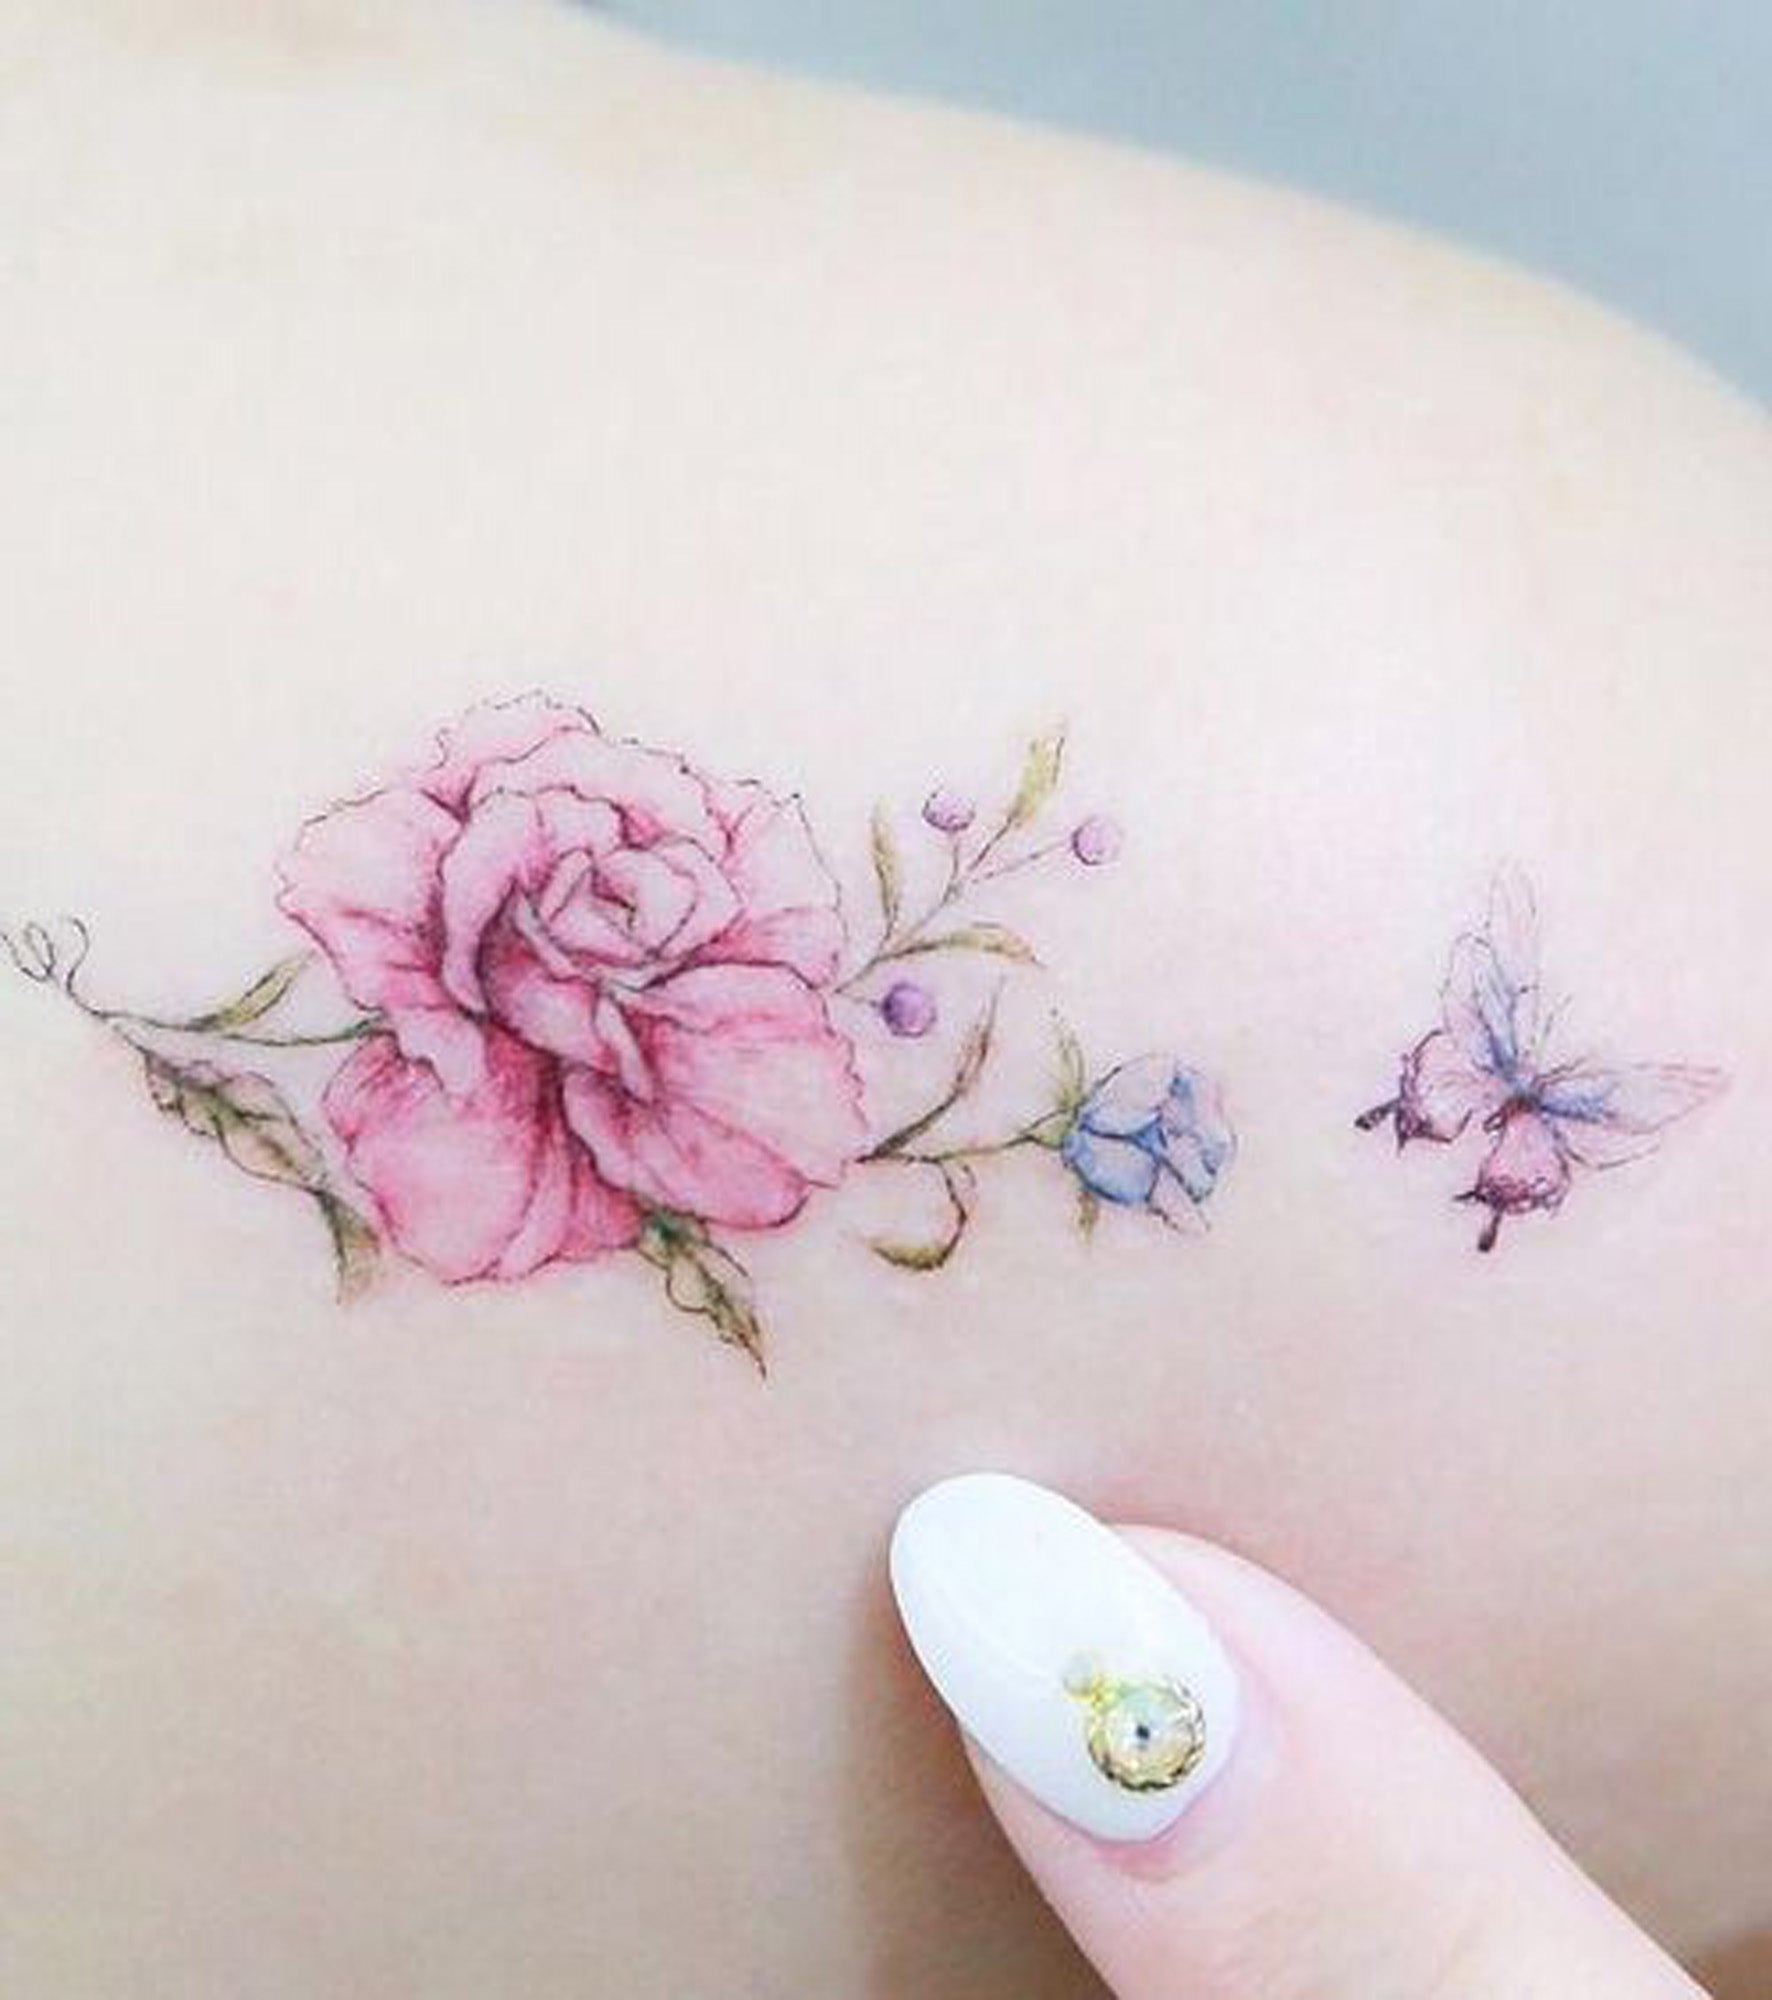 Cute Watercolor Flower Rose Shoulder Tattoo Ideas for Women -  ideas lindas del tatuaje del hombro de la rosa de la acuarela para las mujeres - www.MyBodiArt.com